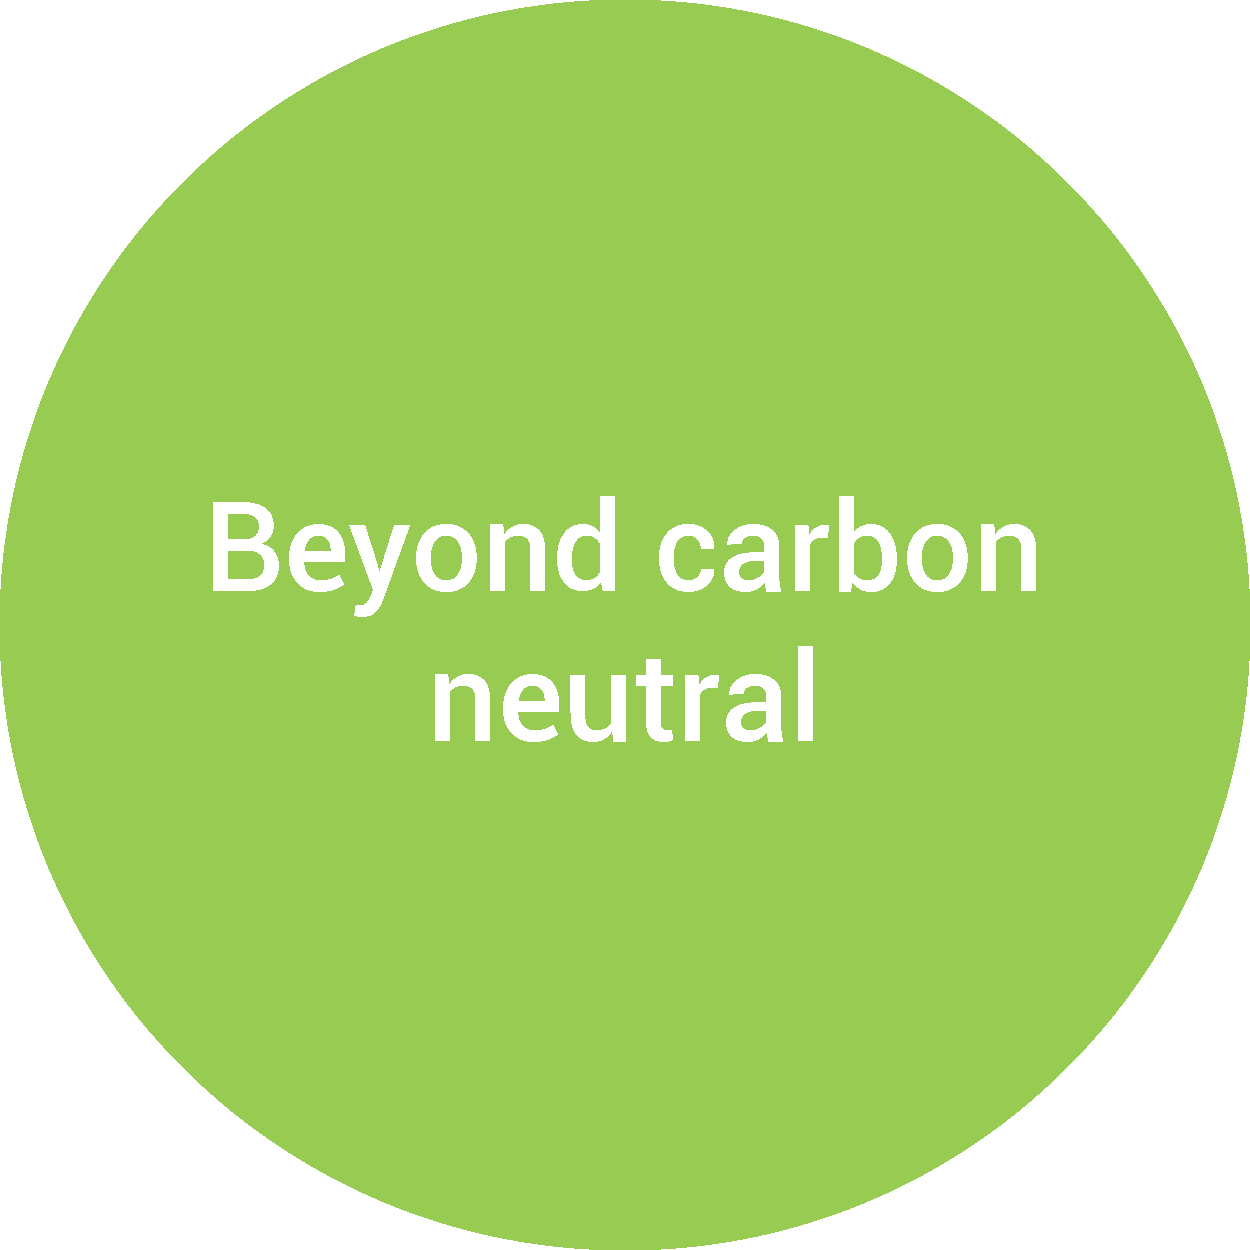 Beyond carbon neutral